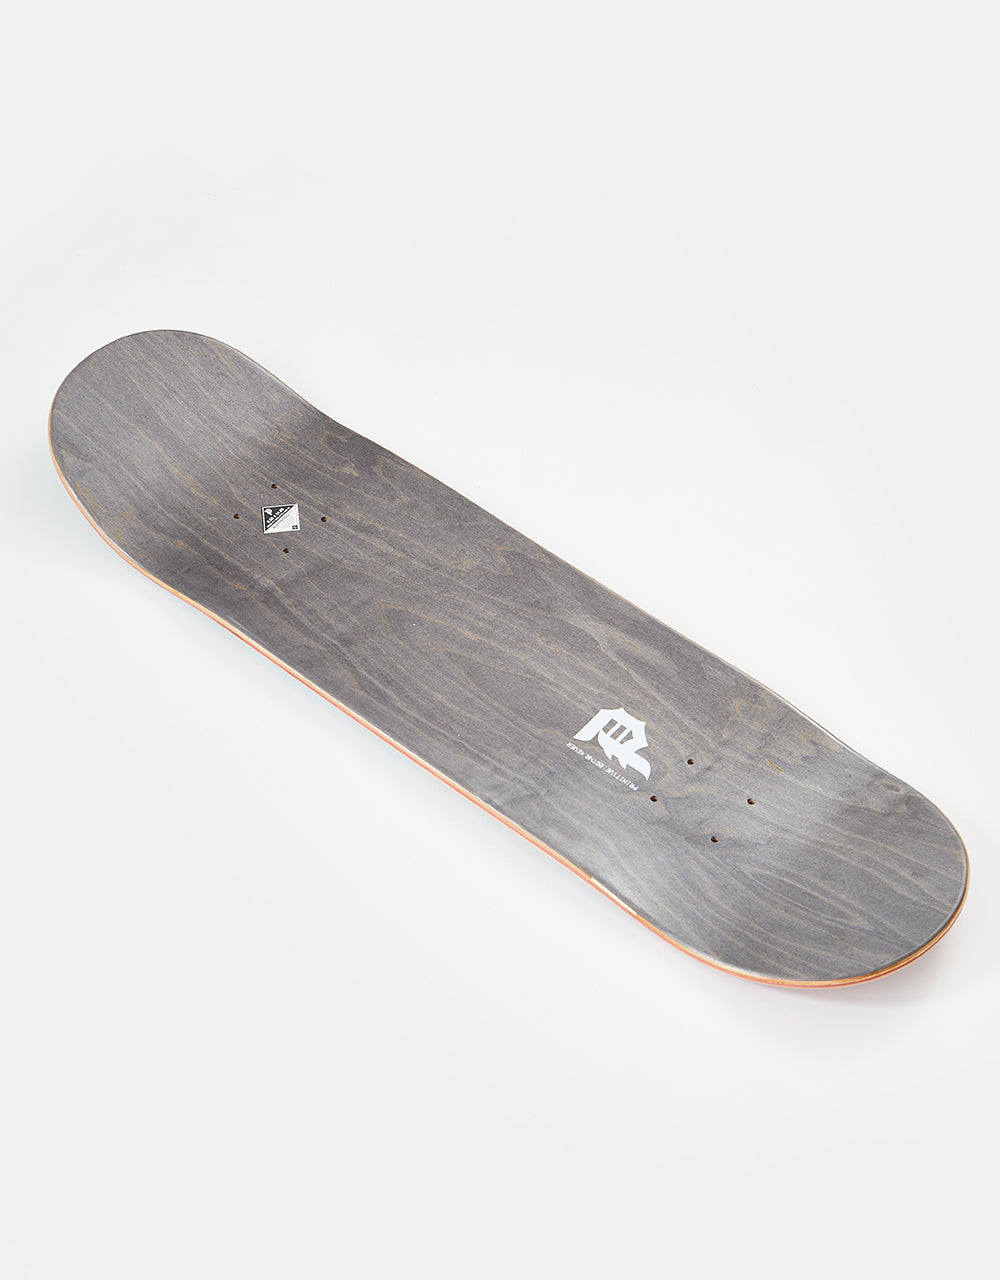 Primitive Long Play Skateboard Deck - 8.25"